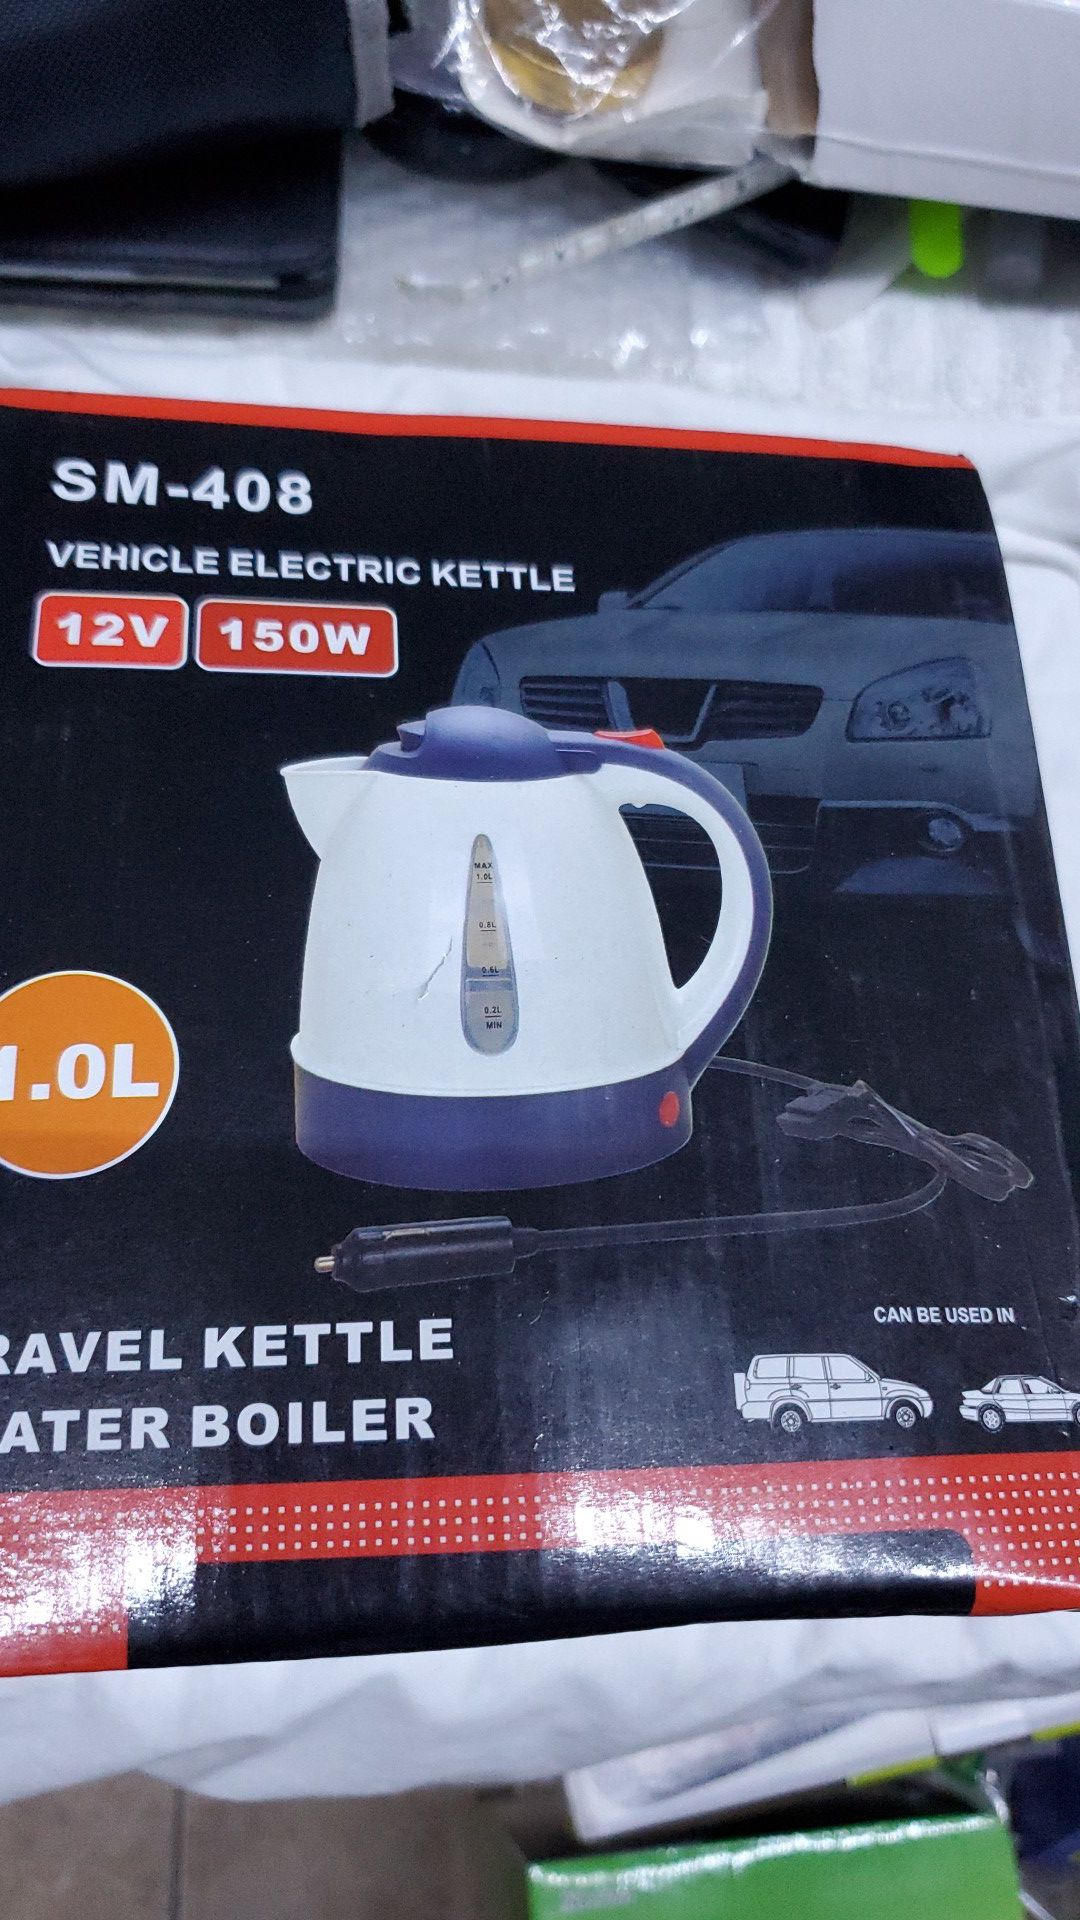 Travel kettle water boiler